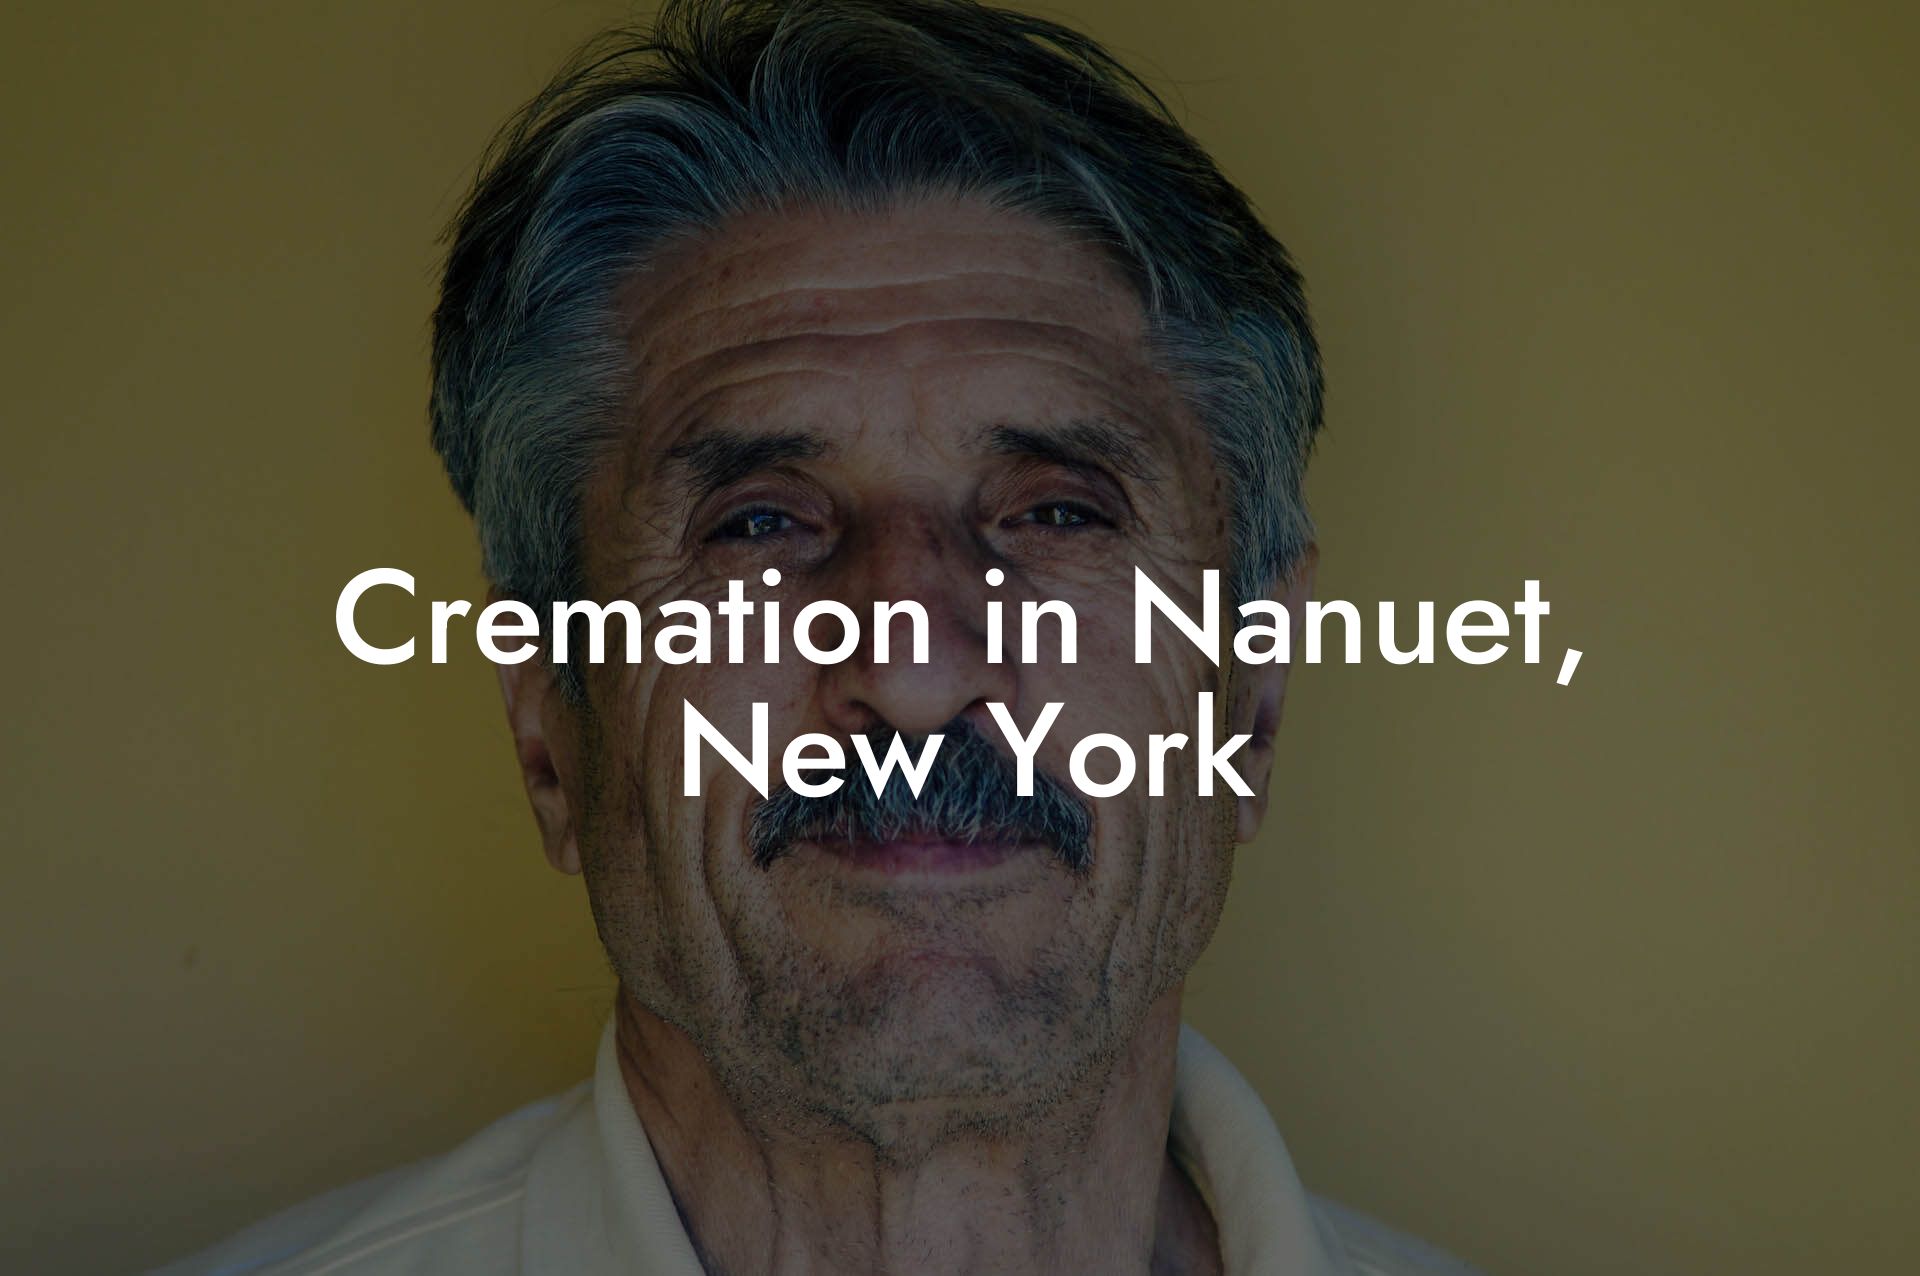 Cremation in Nanuet, New York